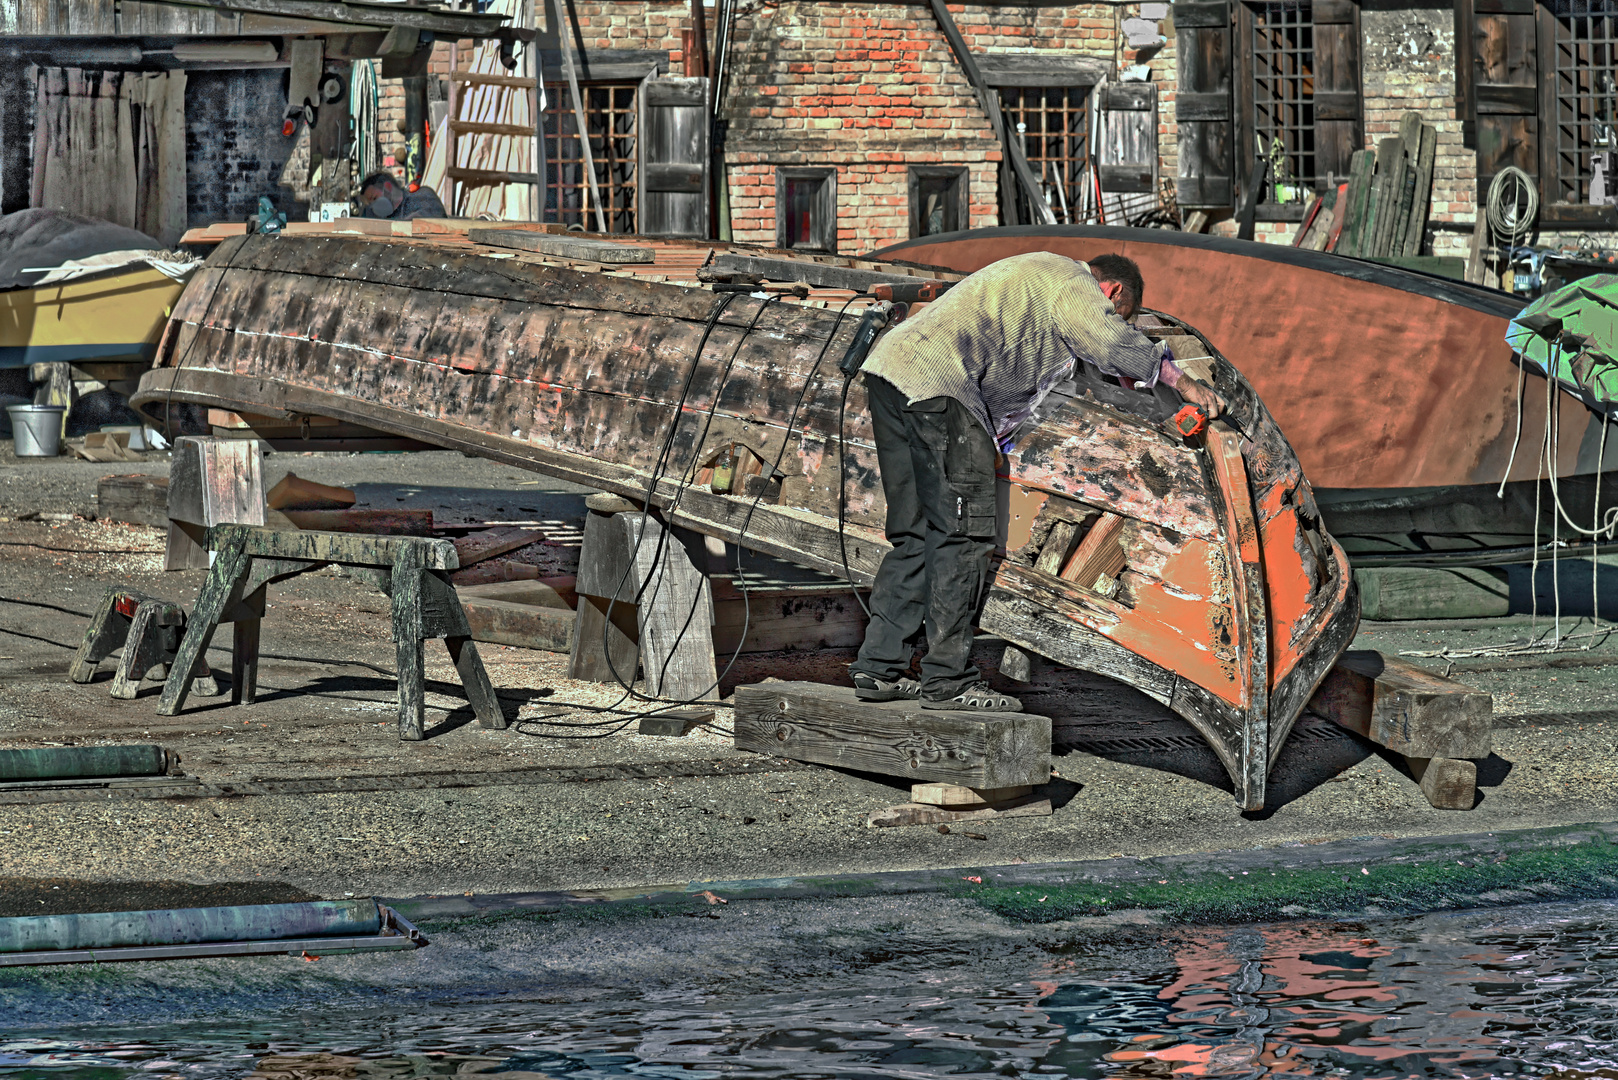 Venedig - Bootswerft San Trovaso Squero